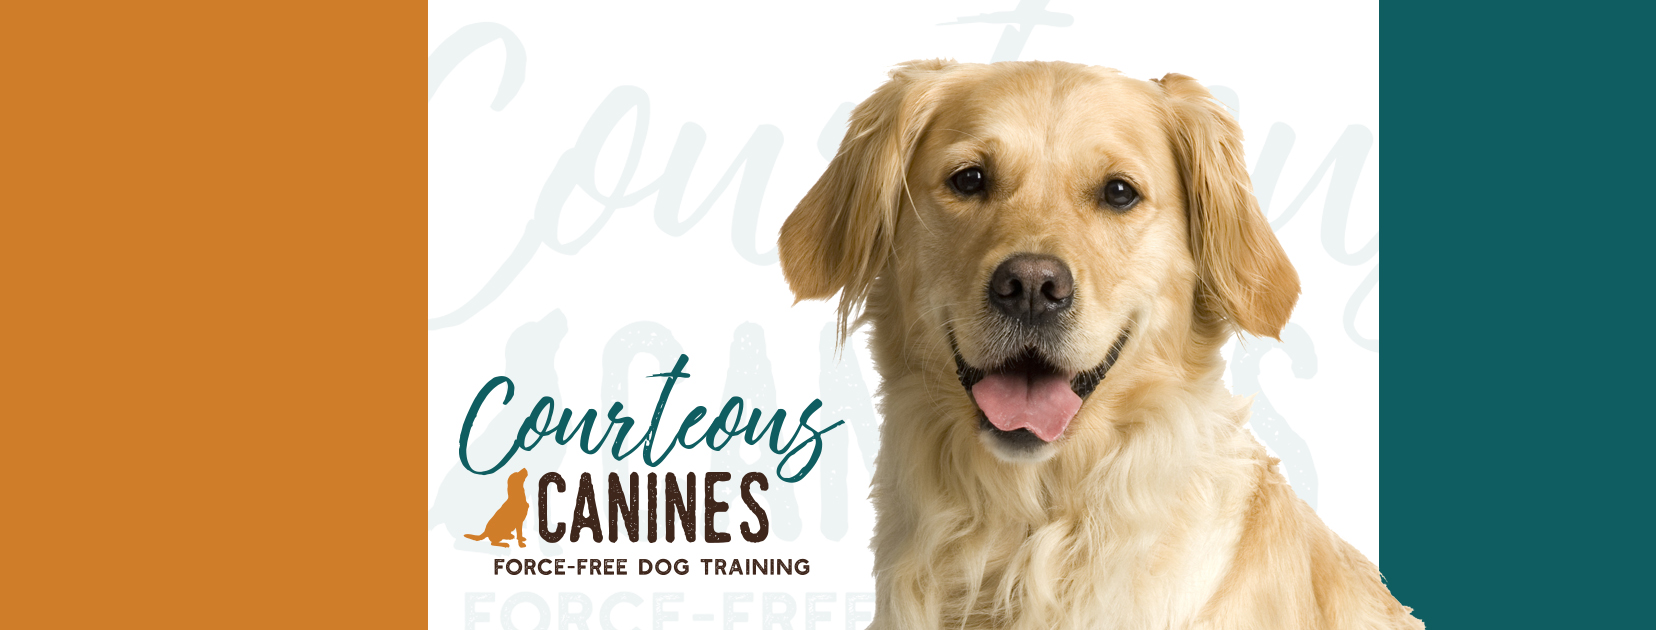 Courteous Canines Force-Free Dog Training